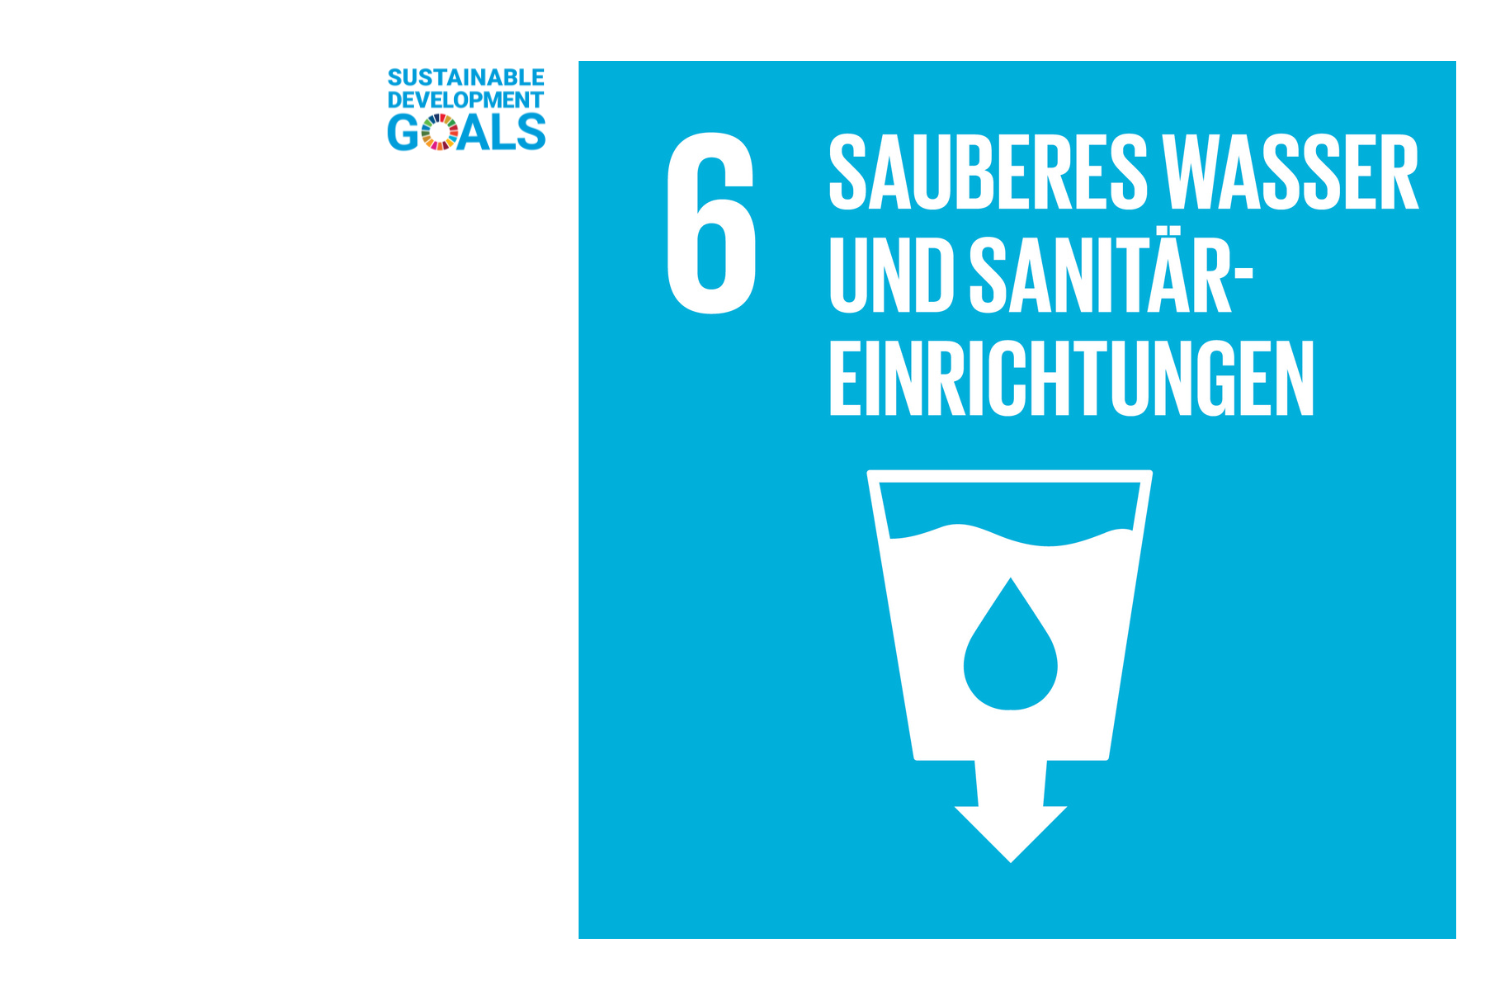 Sauberes Wasser - SDG 6